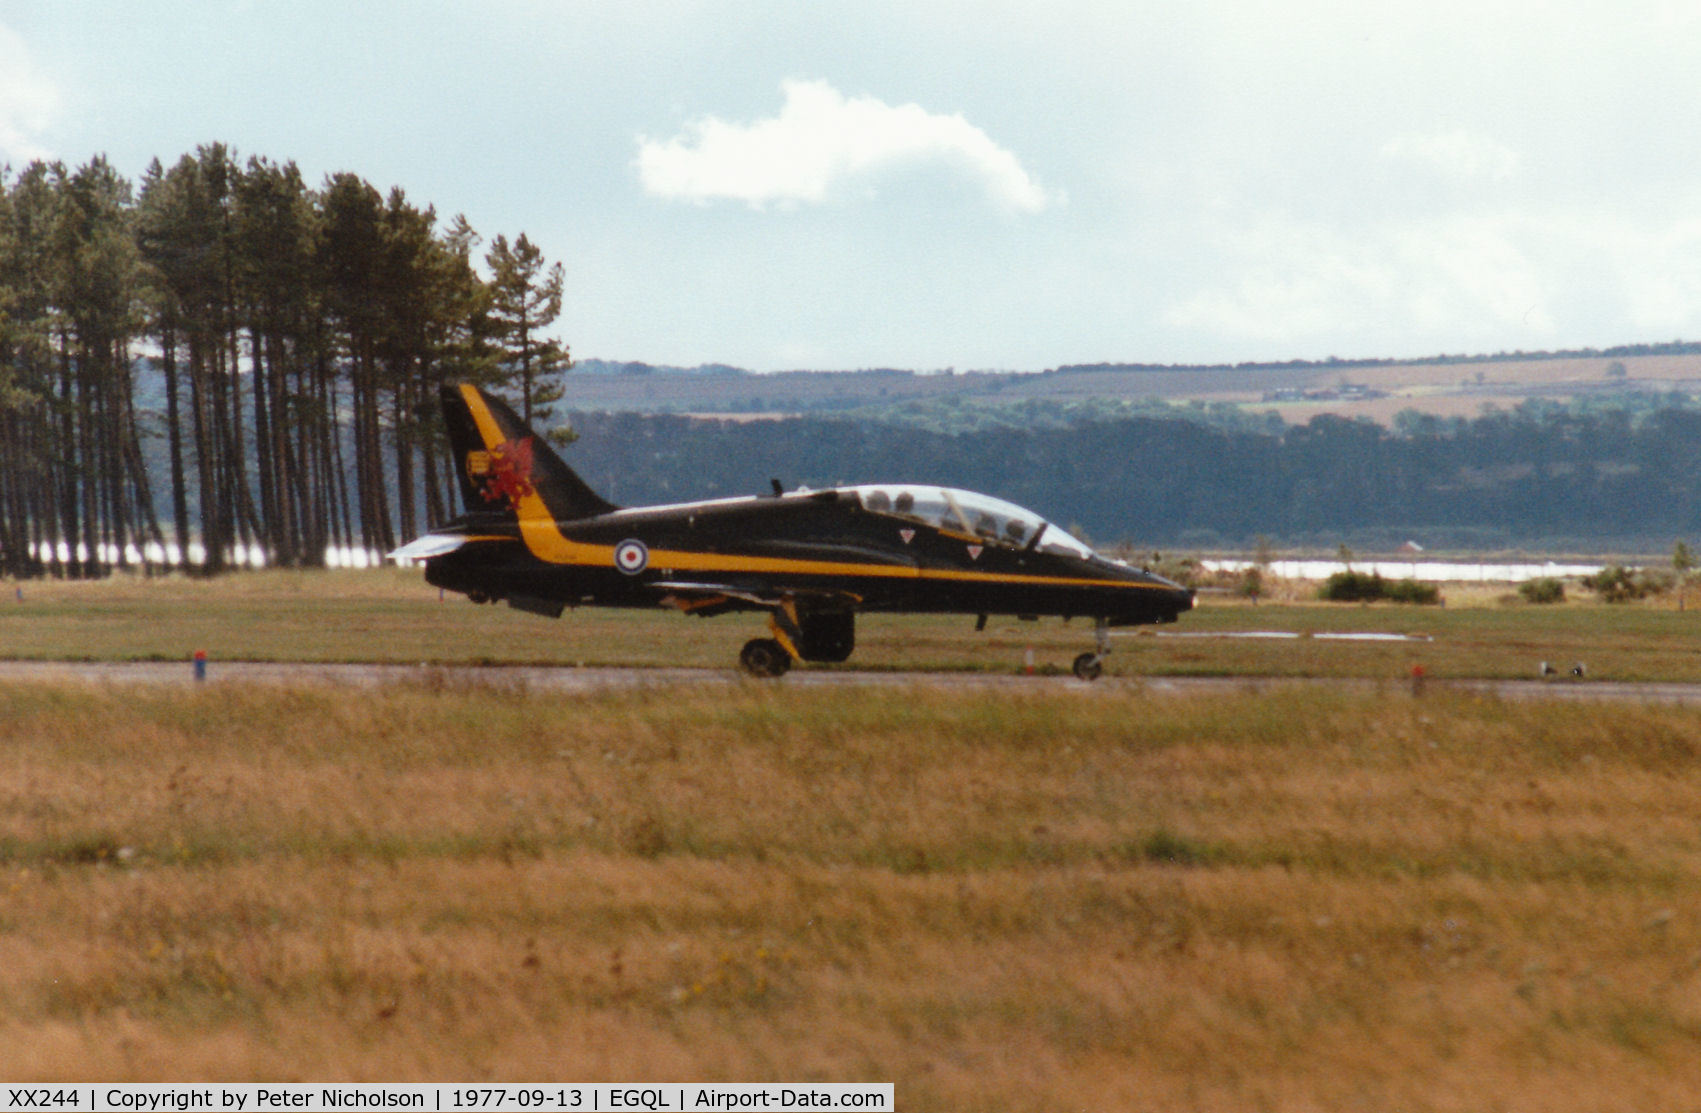 XX244, 1978 Hawker Siddeley Hawk T.1 C/N 080/312080, Hawk T.1 of 74(Reserve) Squadron preparing for take-off at the 1977 RAF Leuchars Airshow.